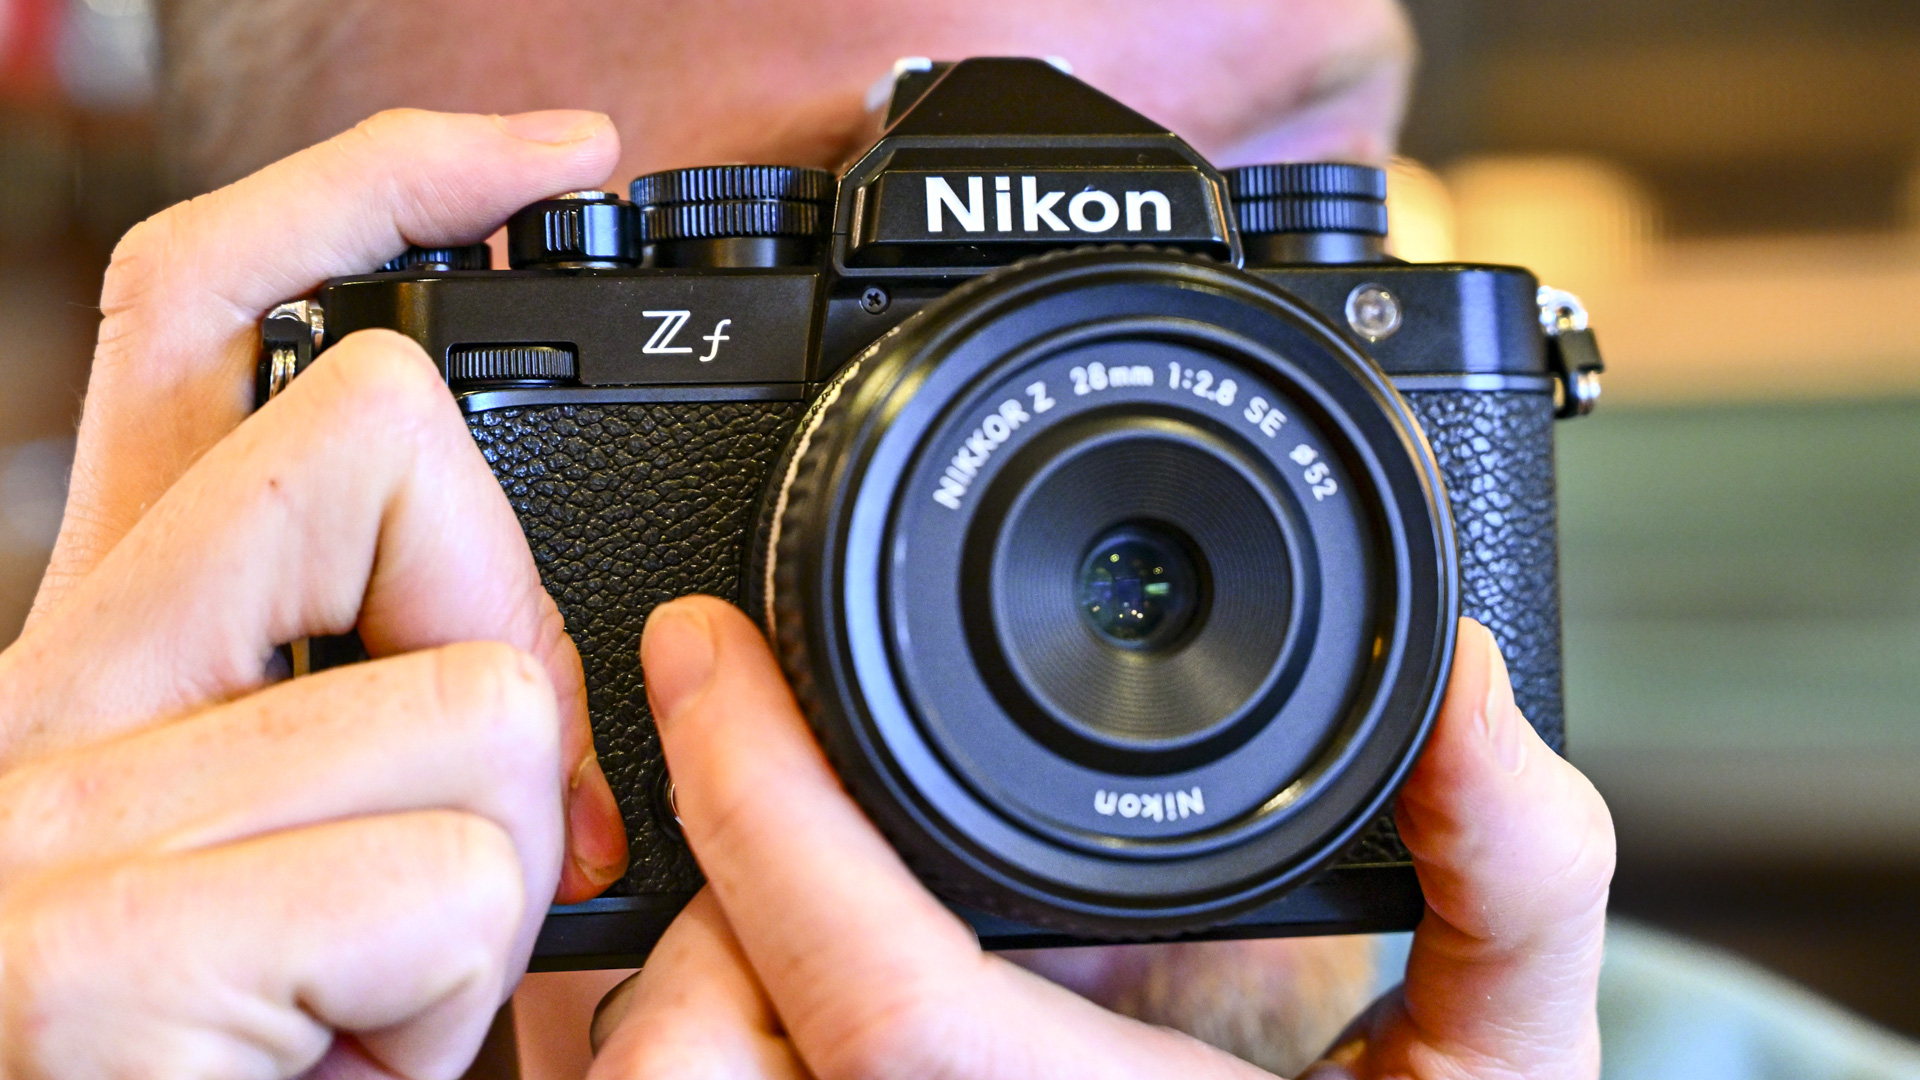 Cámara Nikon Zf sostenida frente al ojo del fotógrafo mediante el visor, con lente Z 28 mm F2.8 SE acoplada